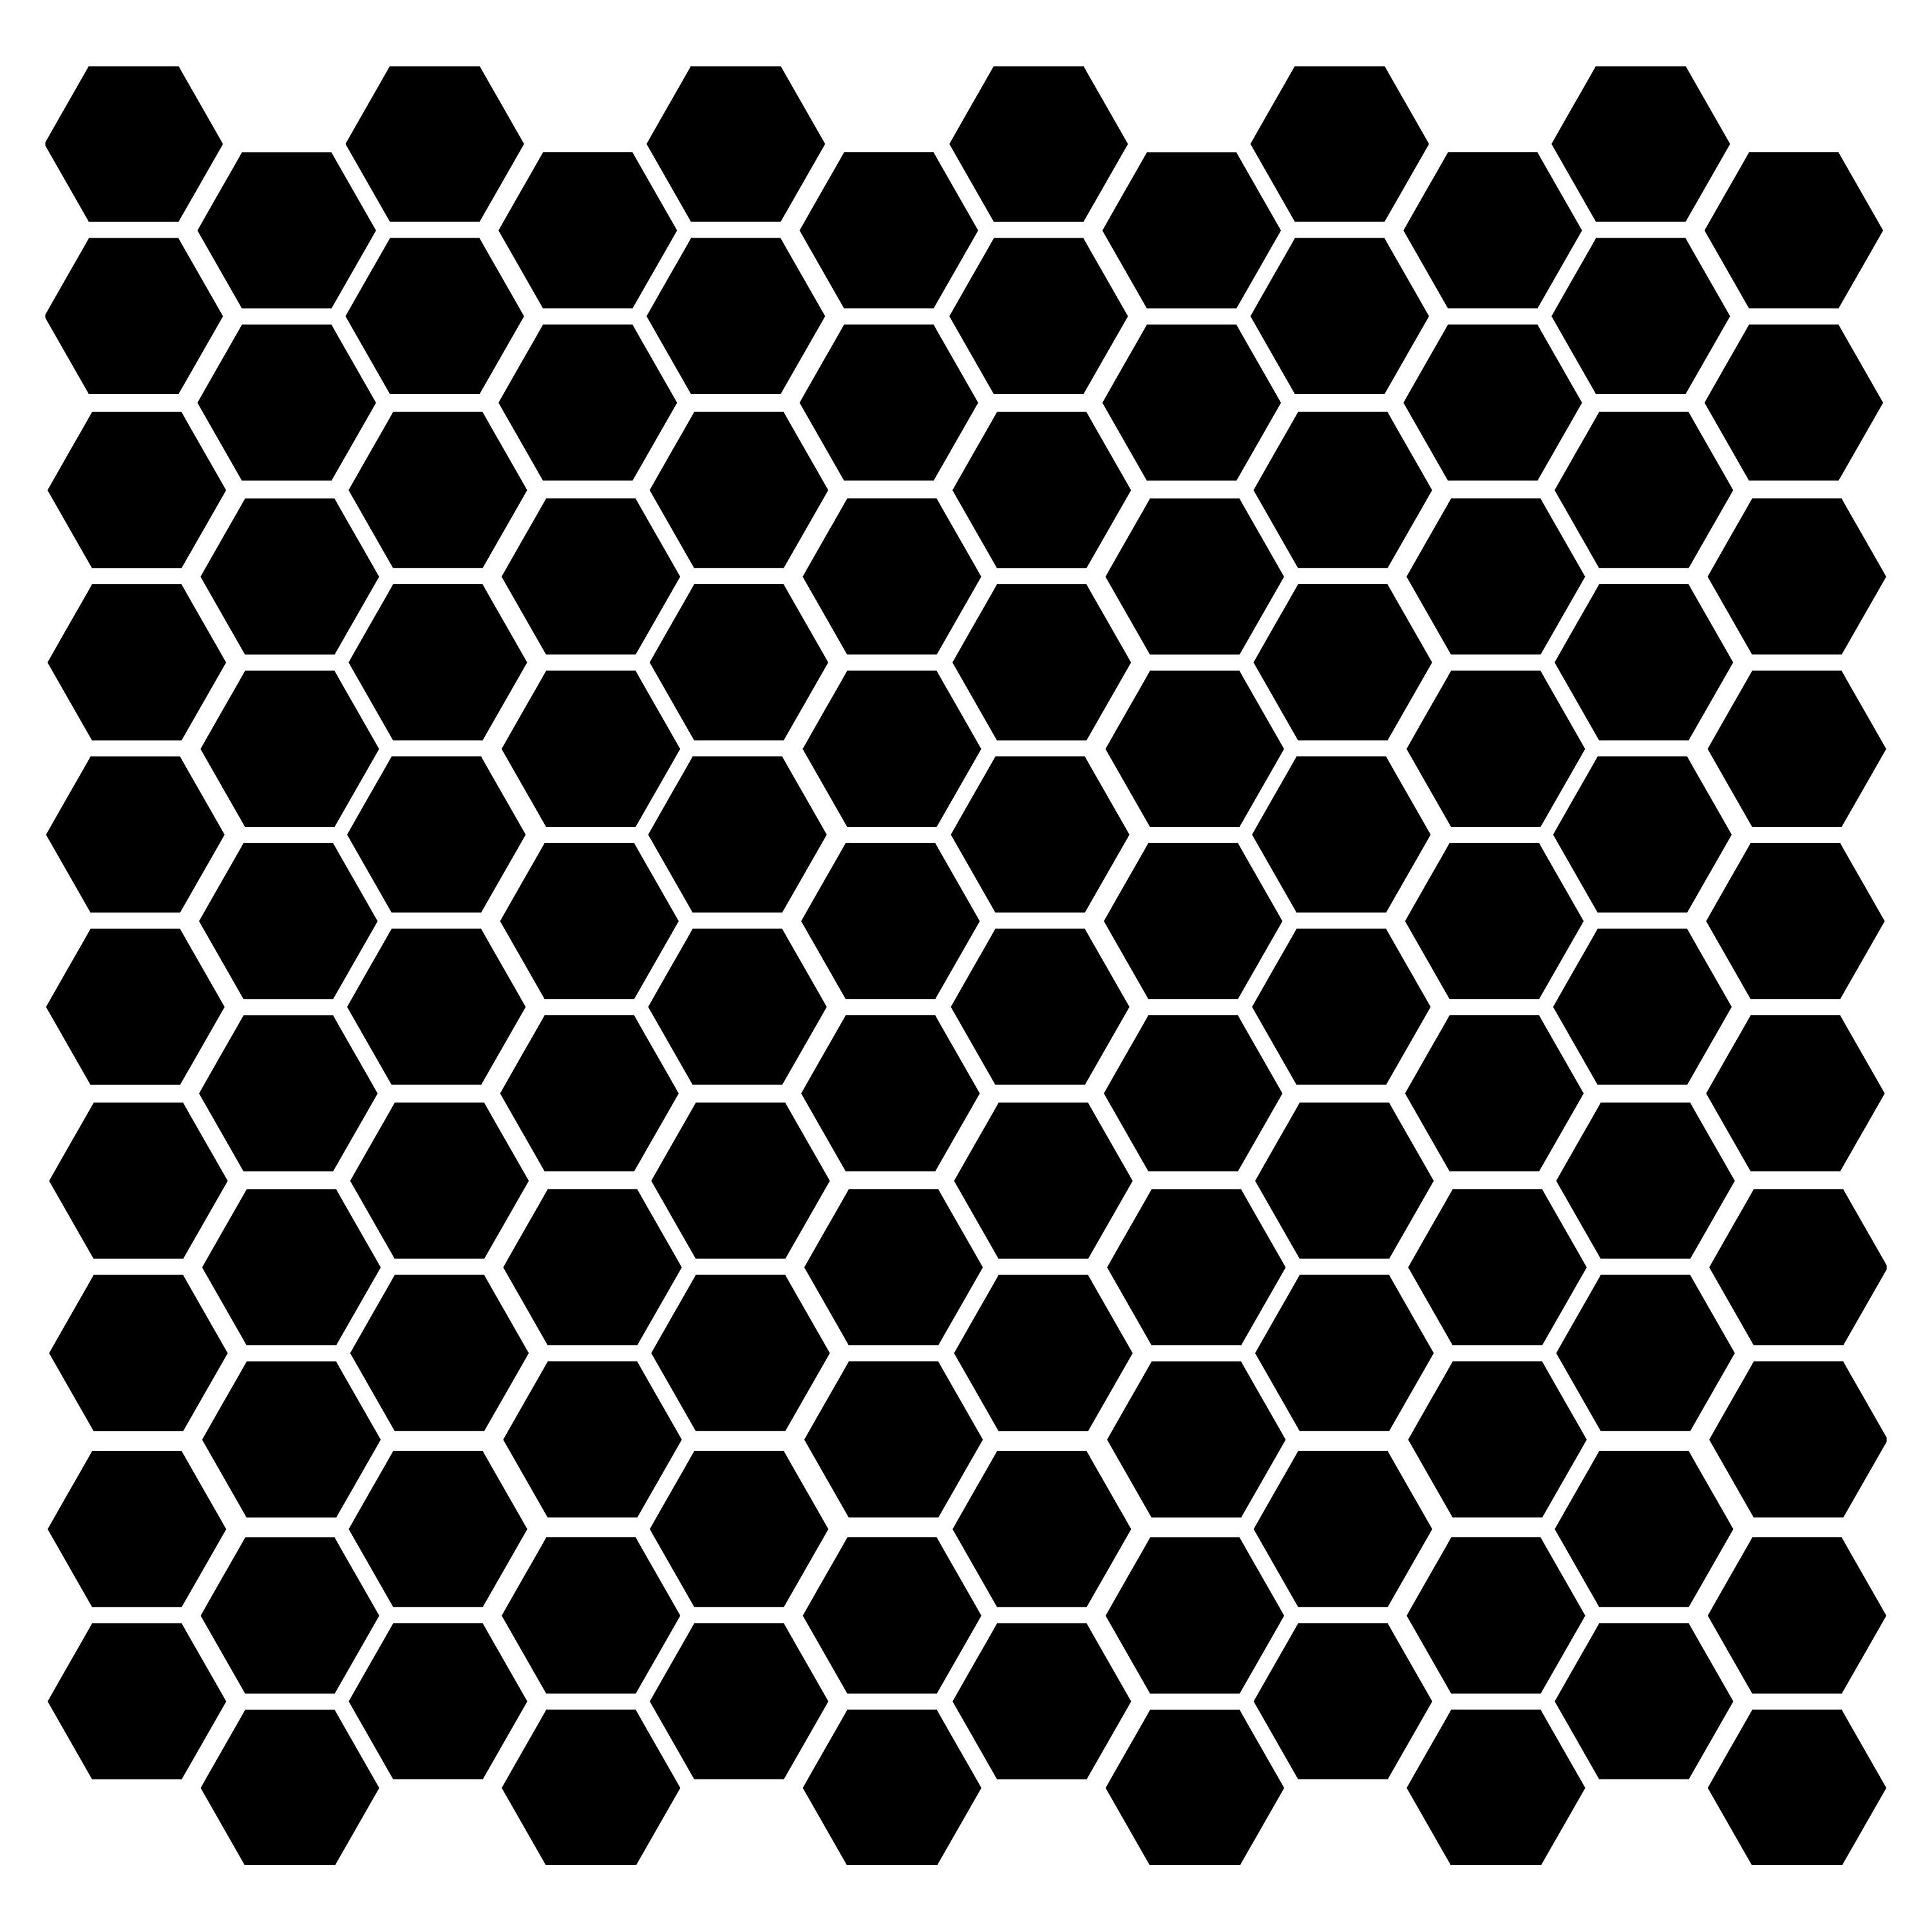  HR-WERBEDESIGN Autocollant de voiture Hexagon Pixel Cyber  Camouflage XXL Set d'autocollants pour voiture Tuning Sticker mural 0